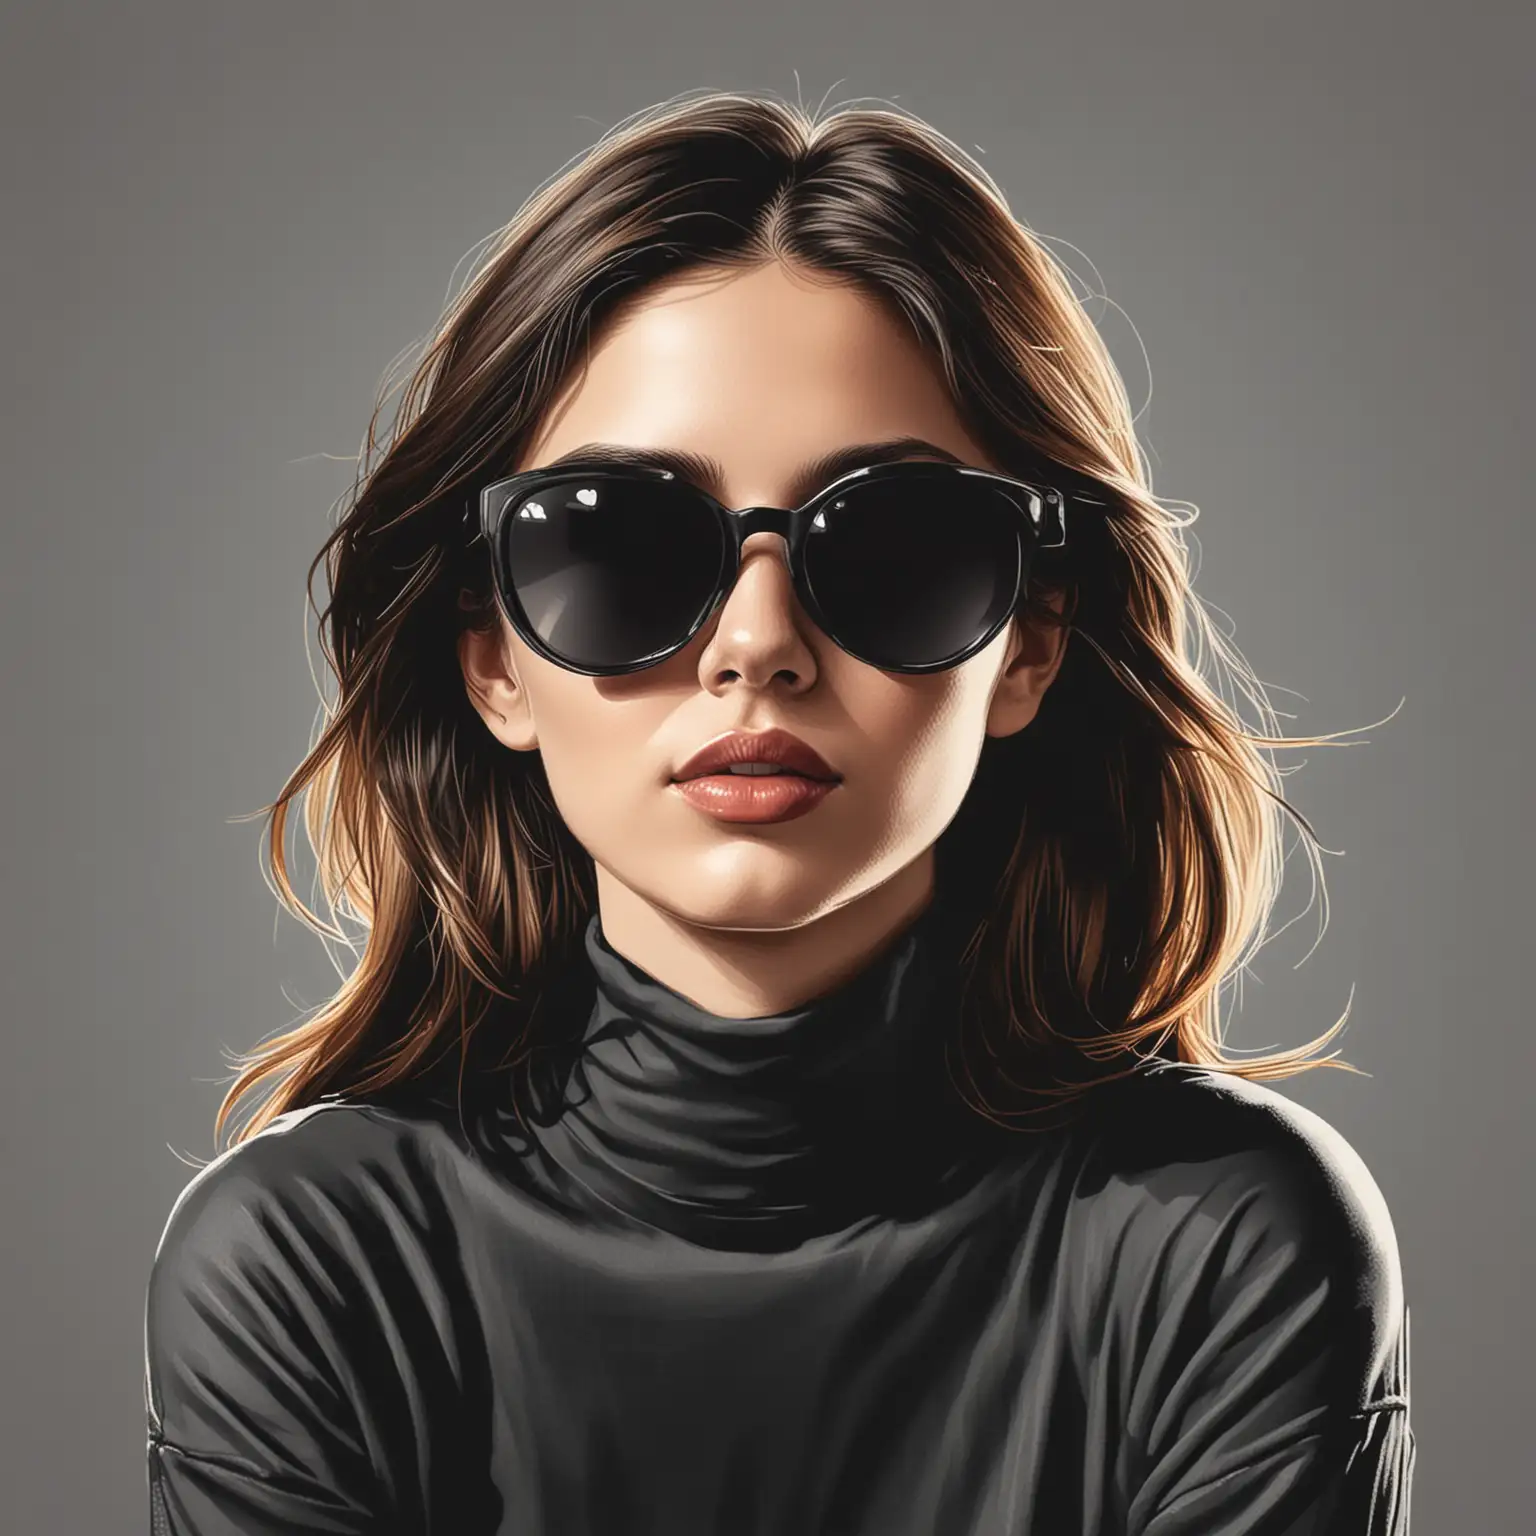 Stylish Woman in Black Sunglasses Sitting